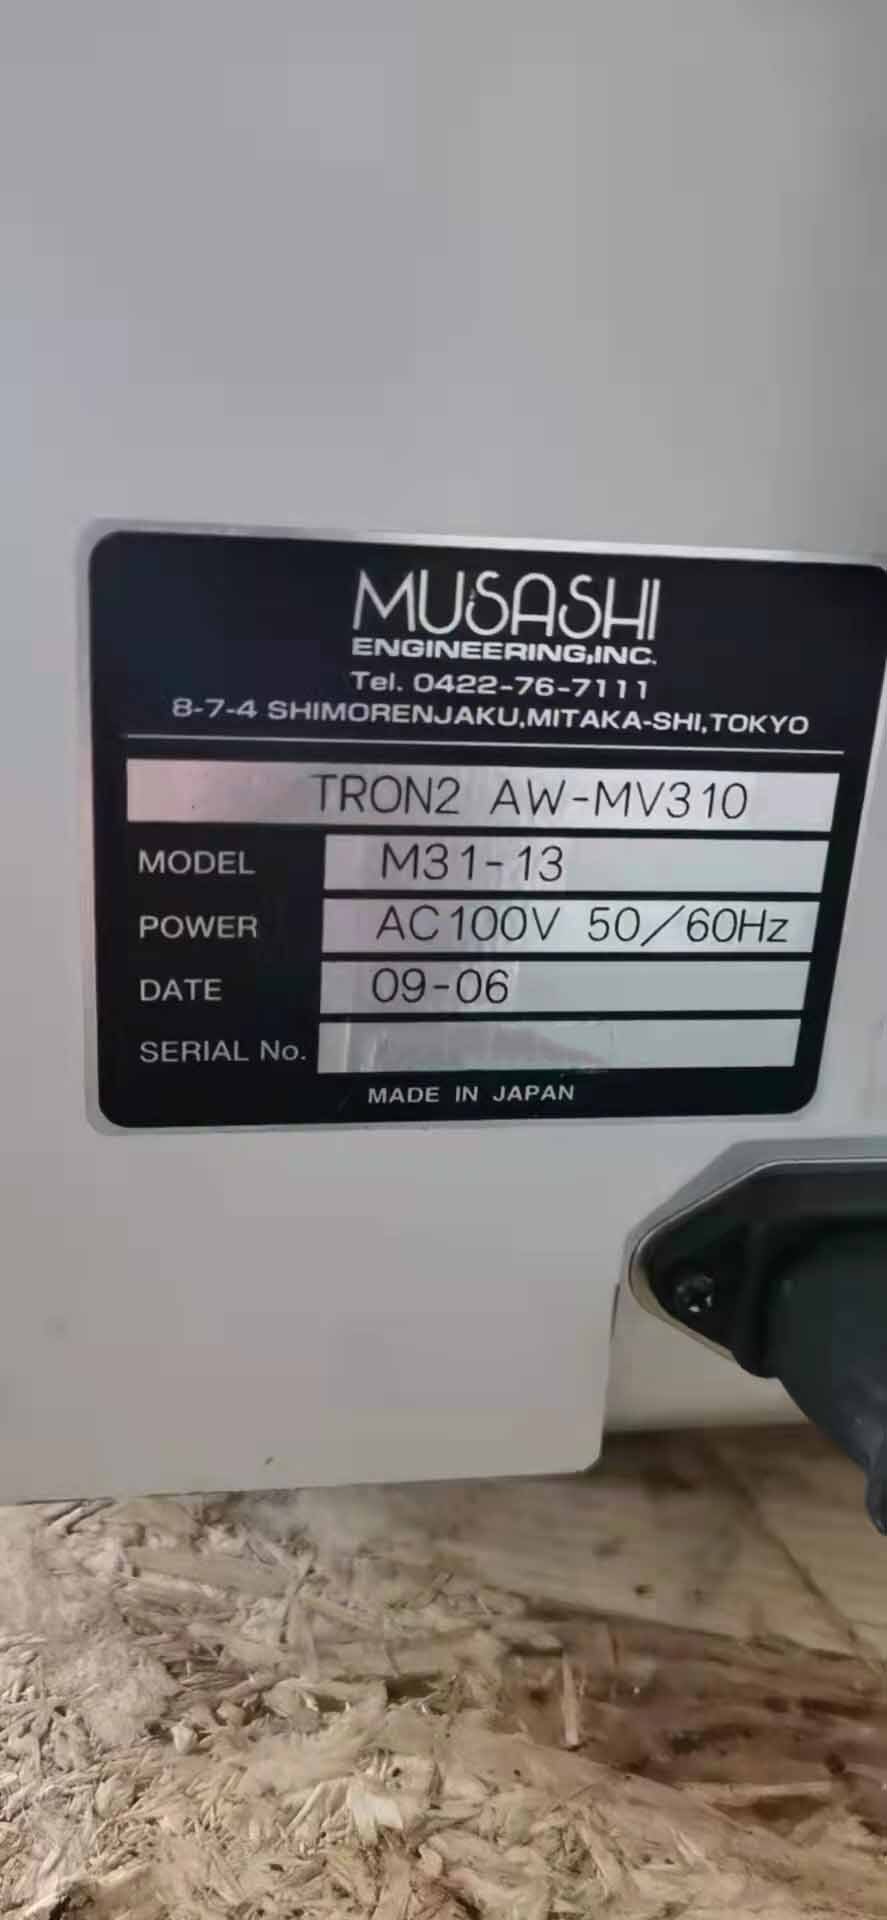 图为 已使用的 MUSASHI ENGINEERING AW-MV310 待售